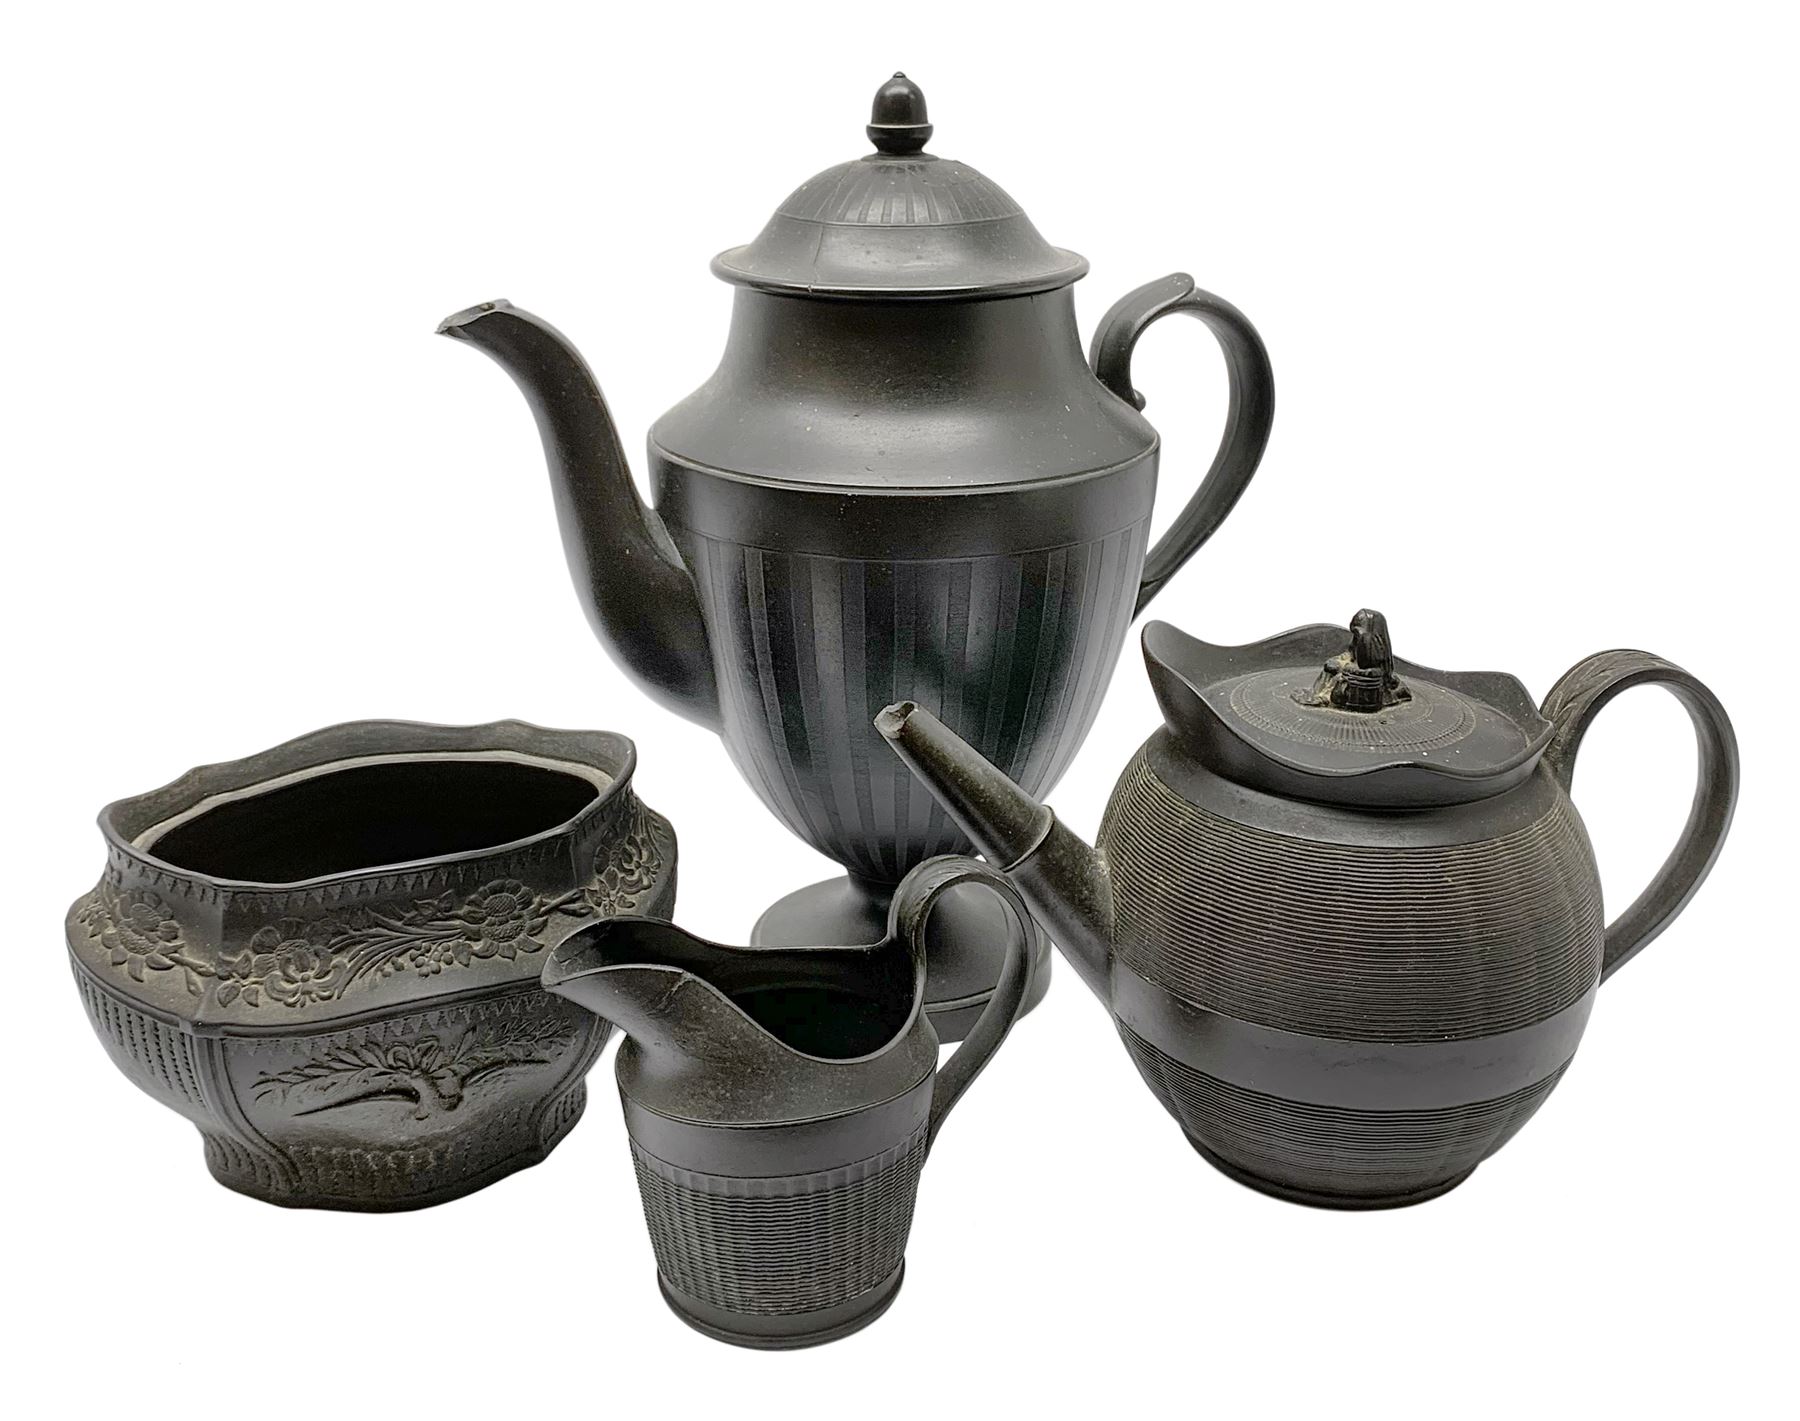 Early/mid 19th century black basalt tea wares